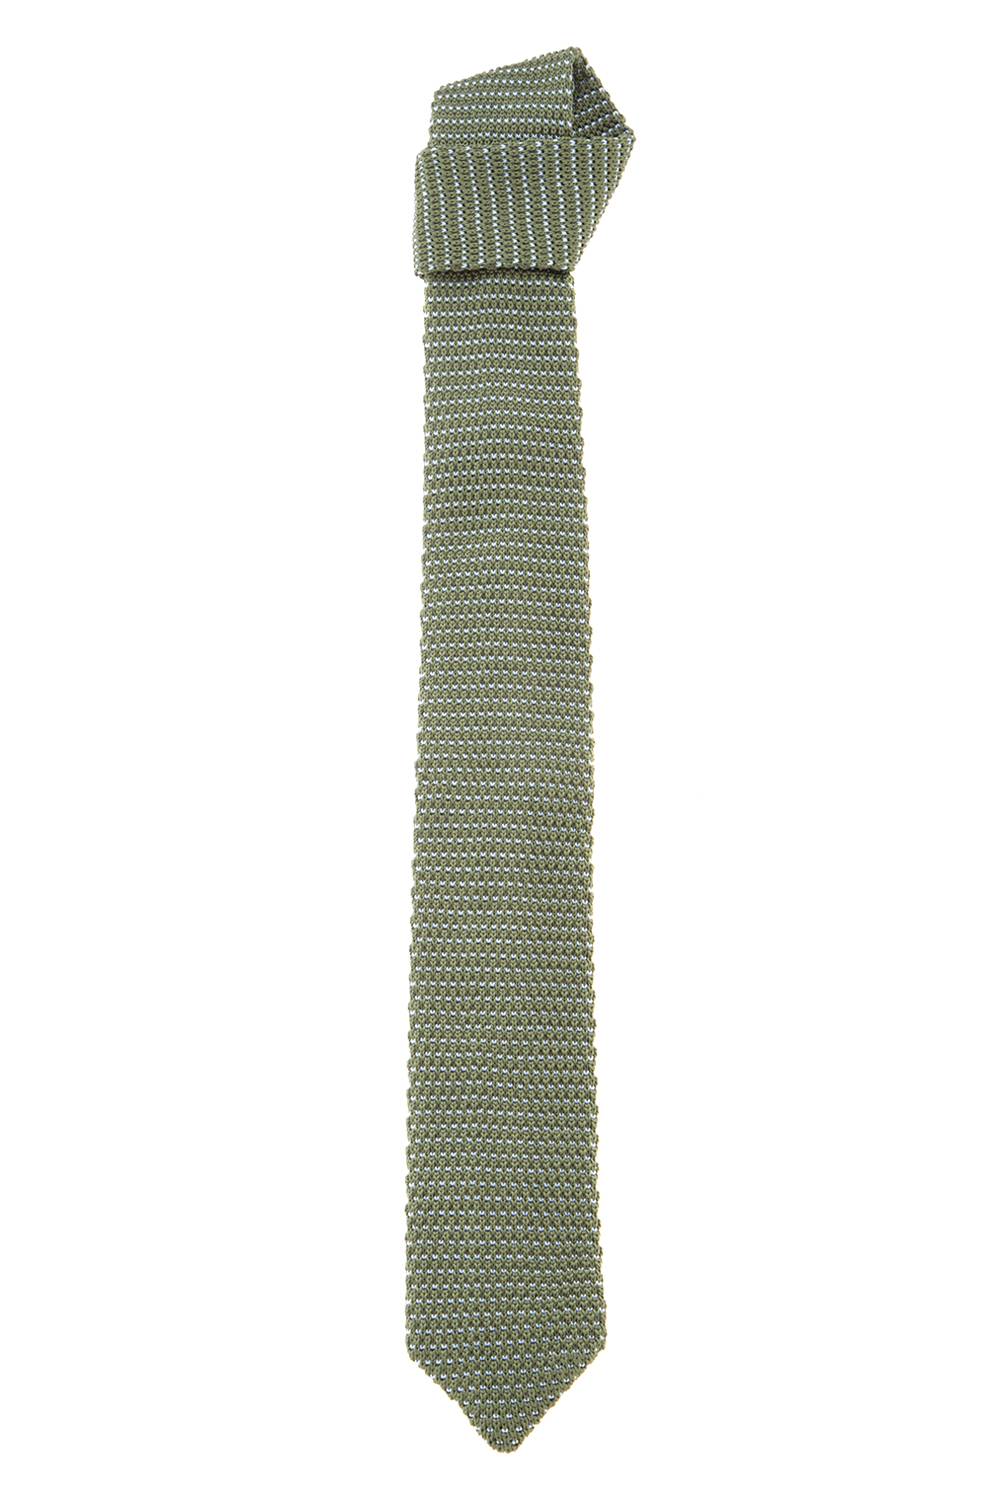 Christian Lacroix - Corbata Tejida Texturado 7 cm, Clásica